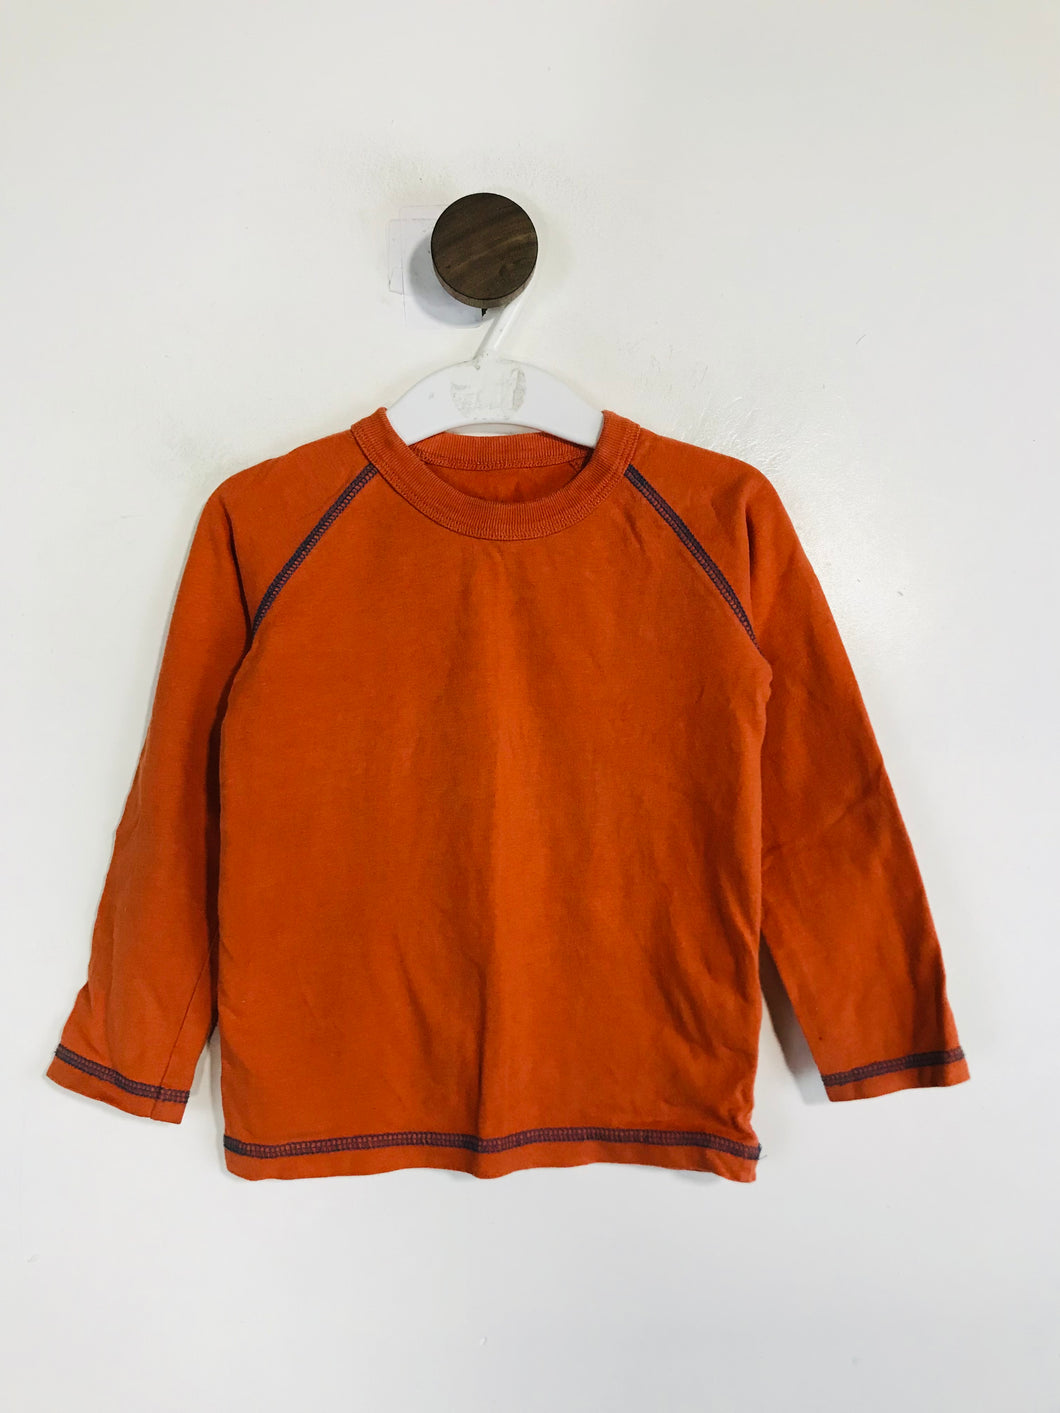 Mini Boden Kid's Long Sleeve T-Shirt | 1.5-2 Years | Orange